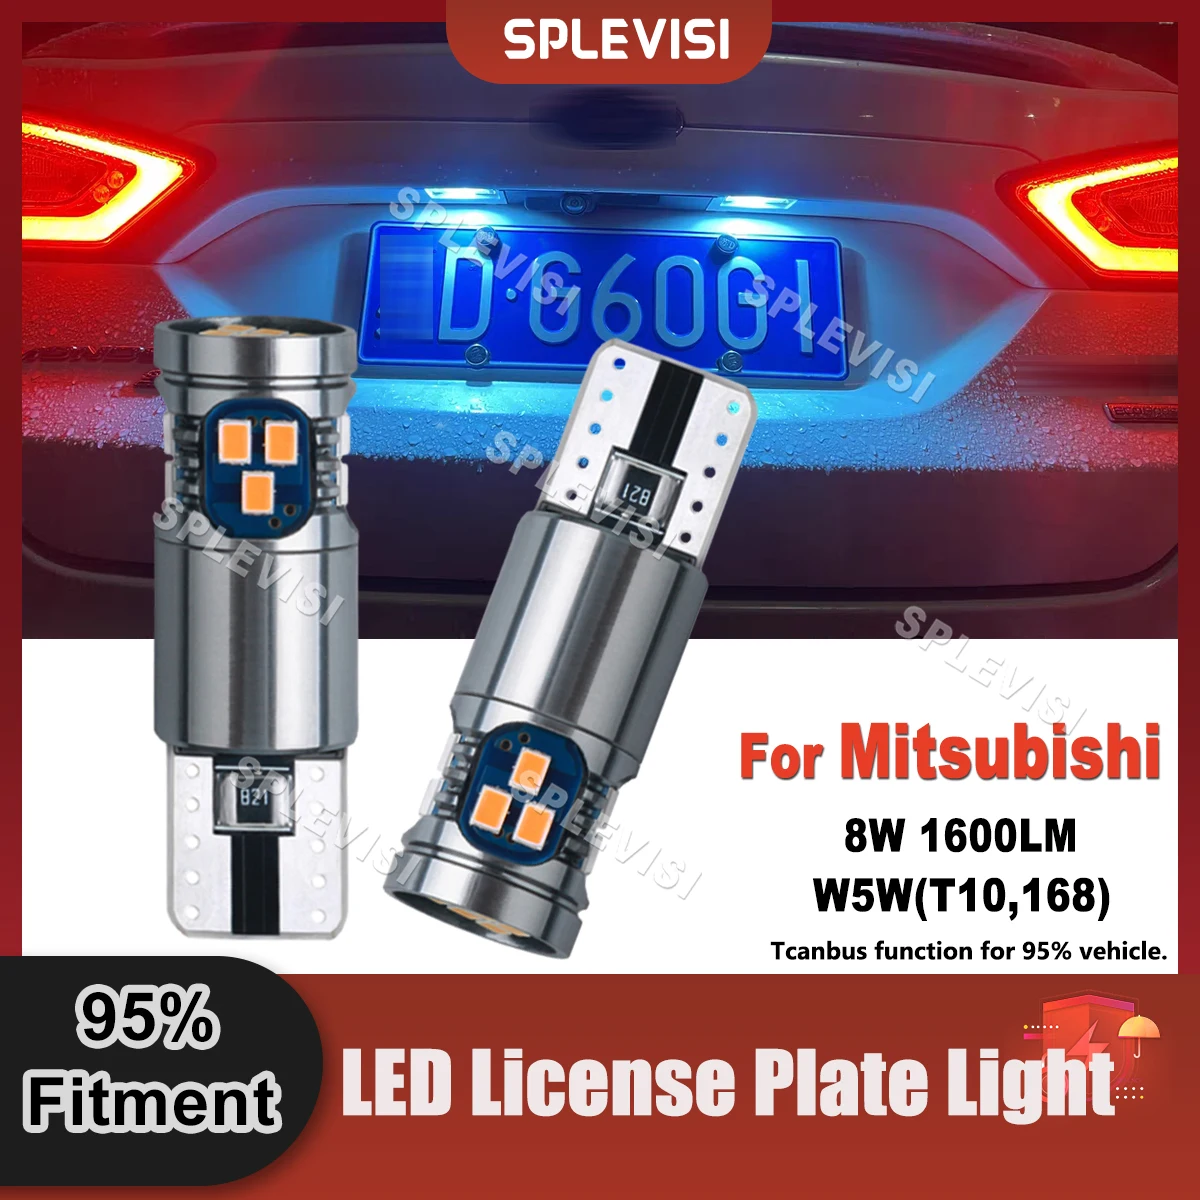 

2PCS T10 W5W 1600LM LED License Number Plate Light Bulbs For Chevy Chevrolet Impala Malibu Tahoe Equinox Traverse Cruze Colorado